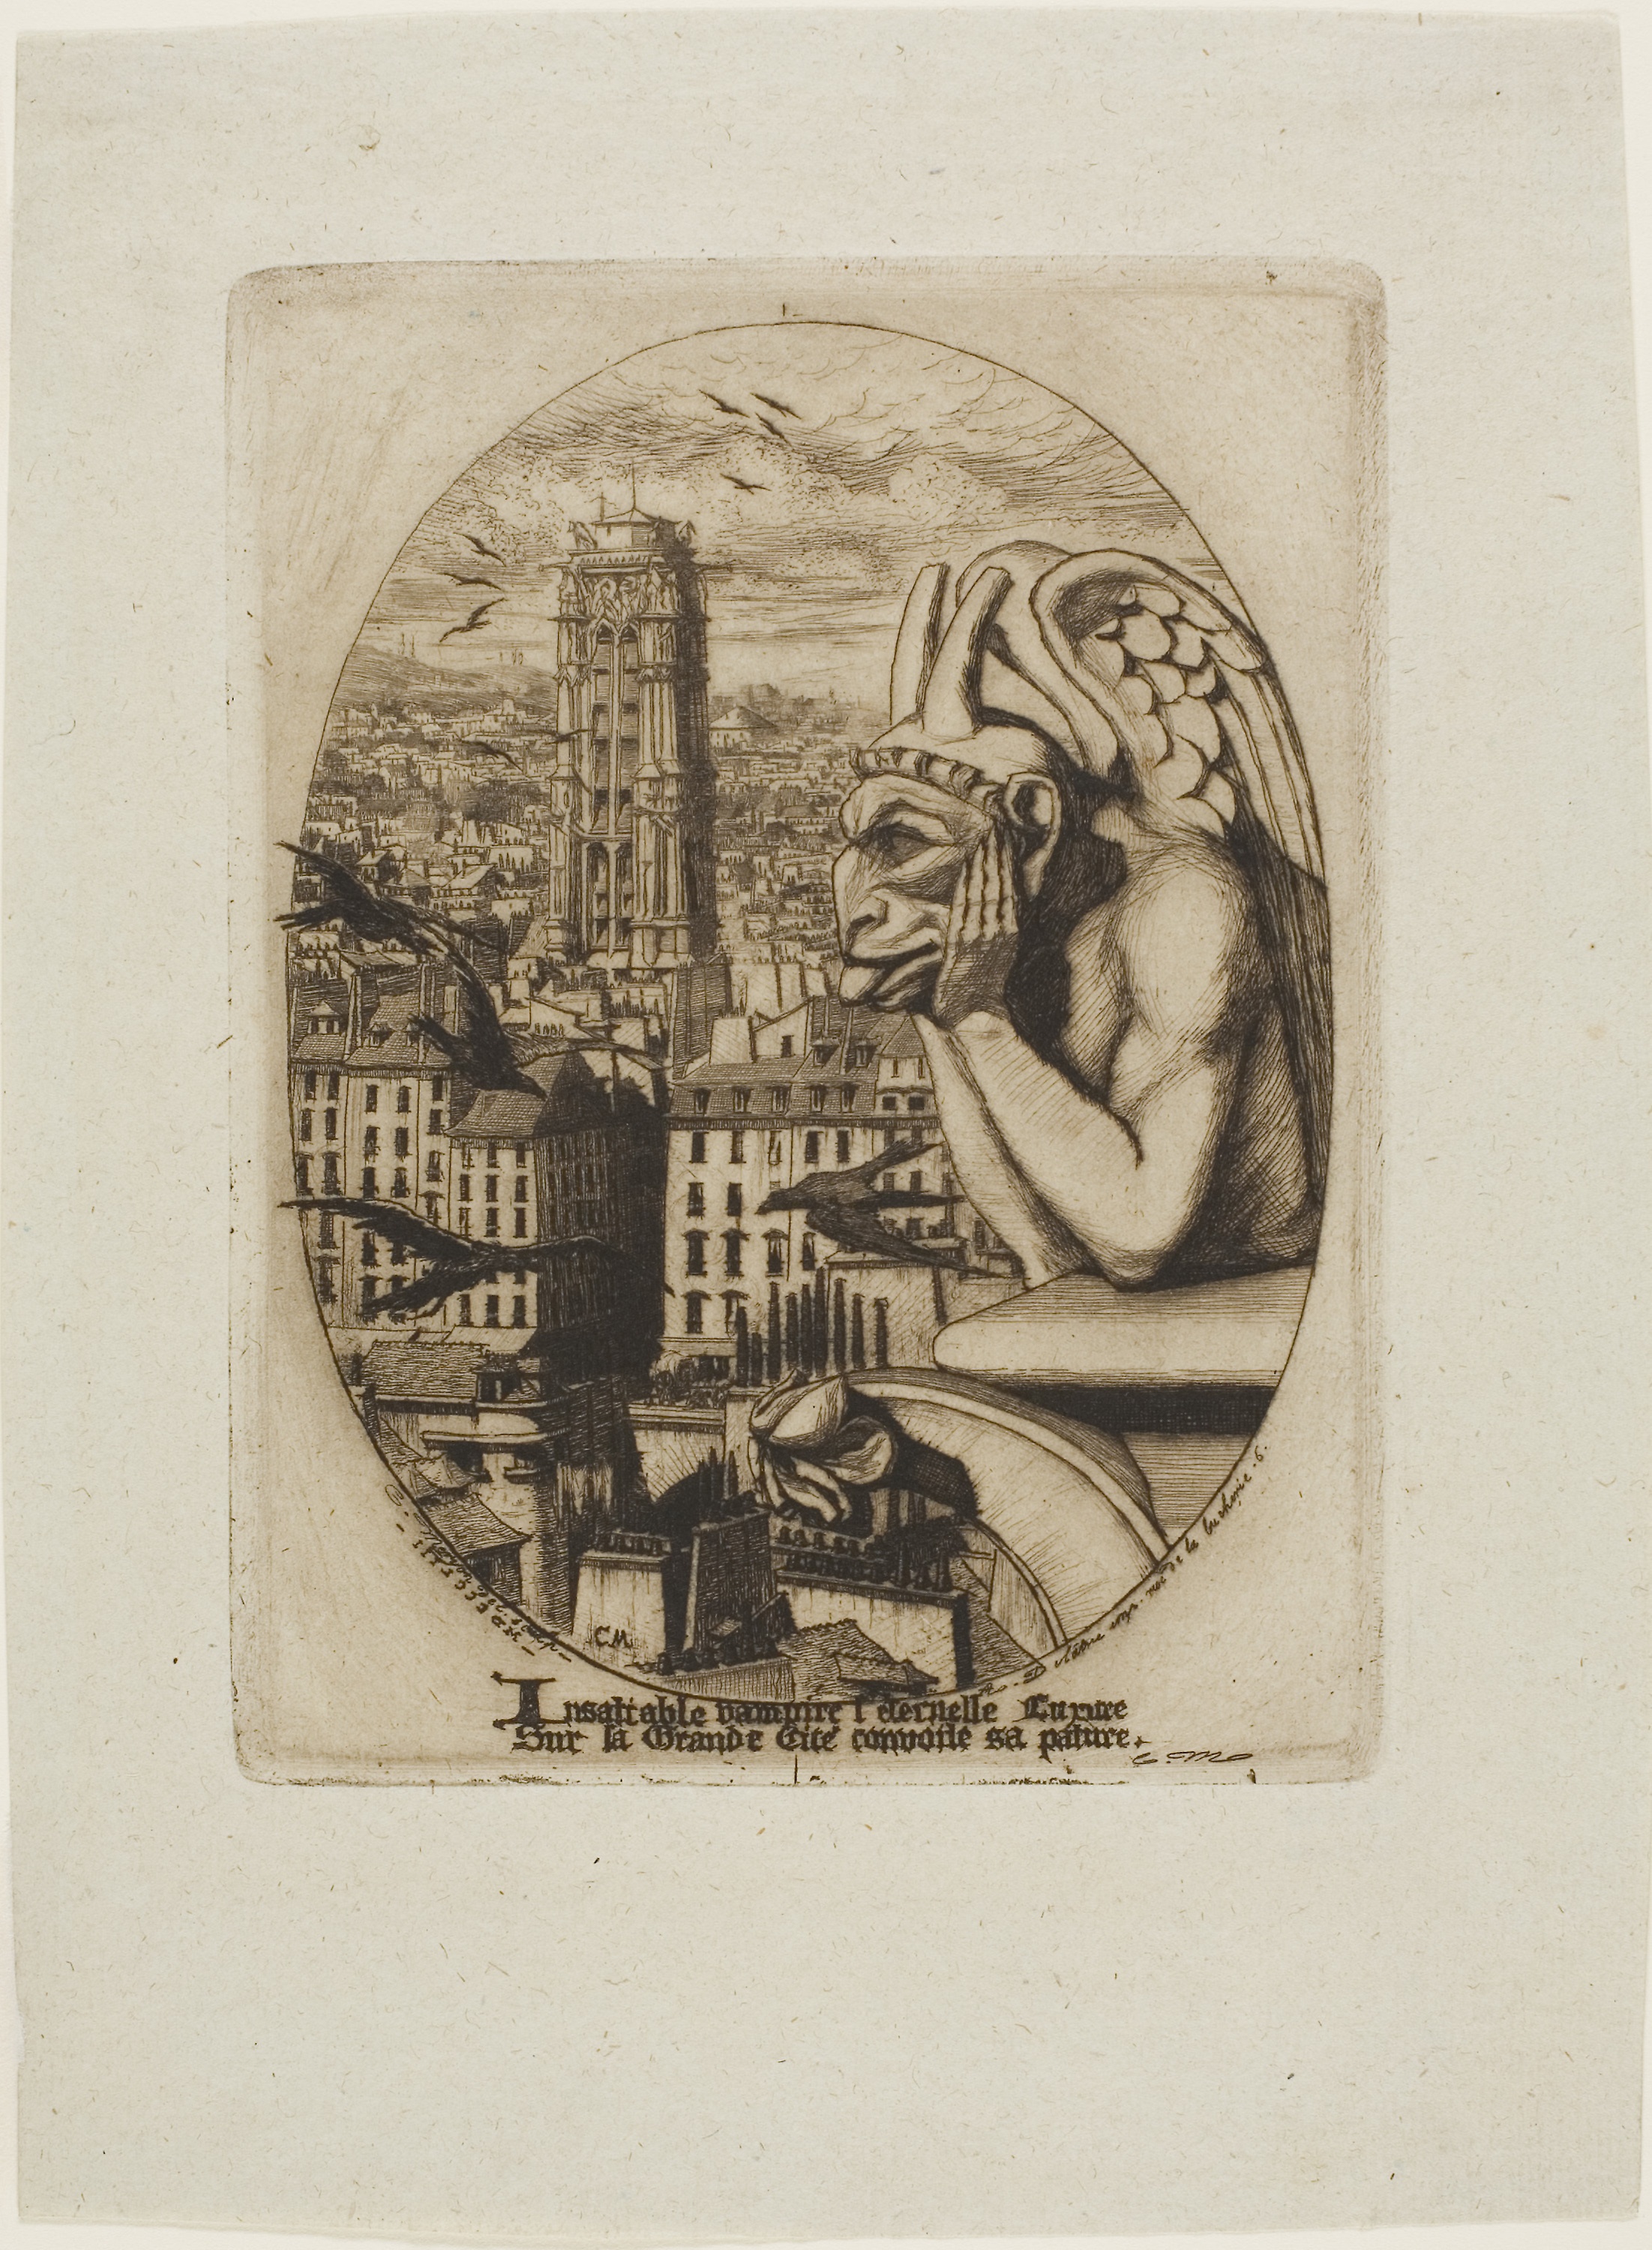 Le Stryge (Vampirul) by Charles Méryon - 1853 - 15.5 x 11.5 cm 